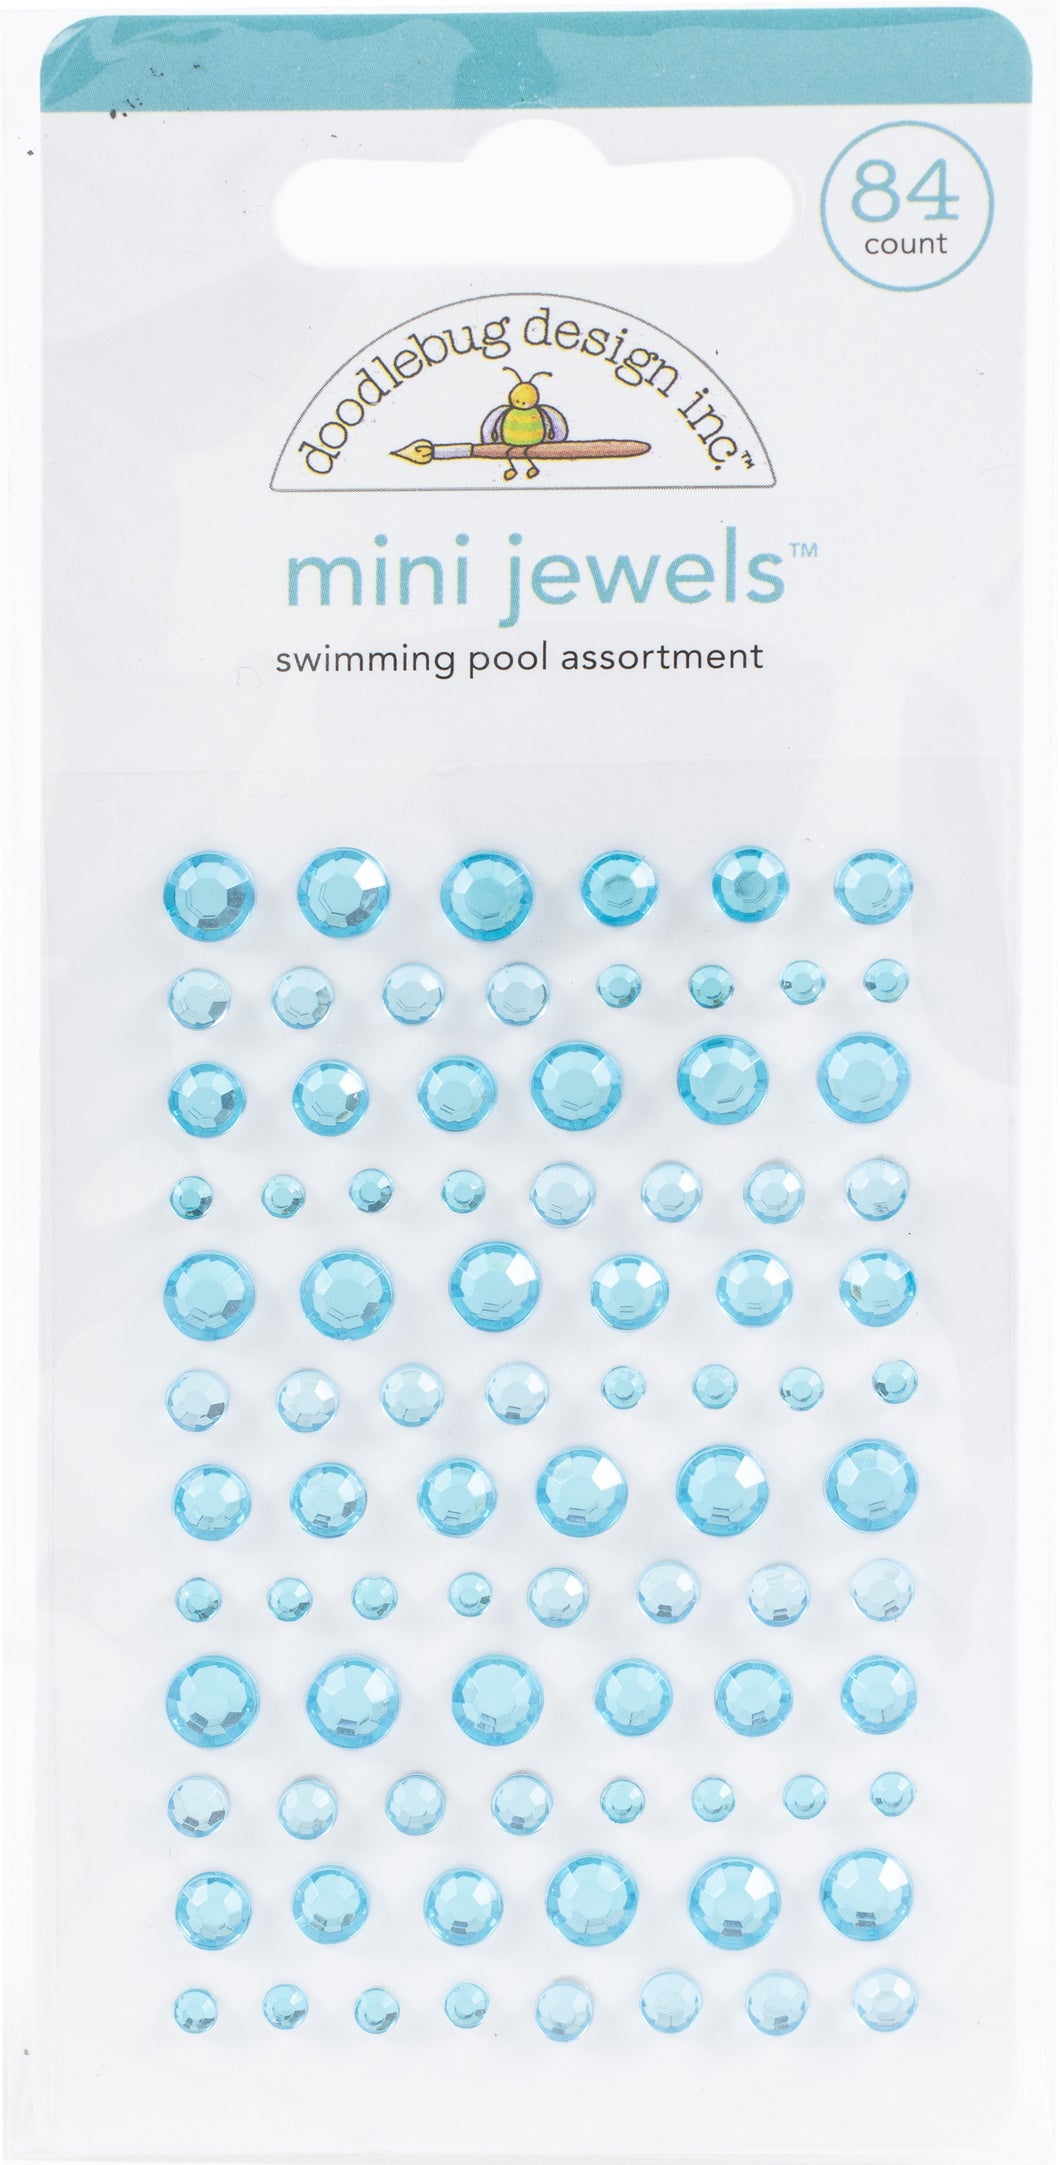 Doodlebug Design: Mini Jewels - Swimming Pool Assortment